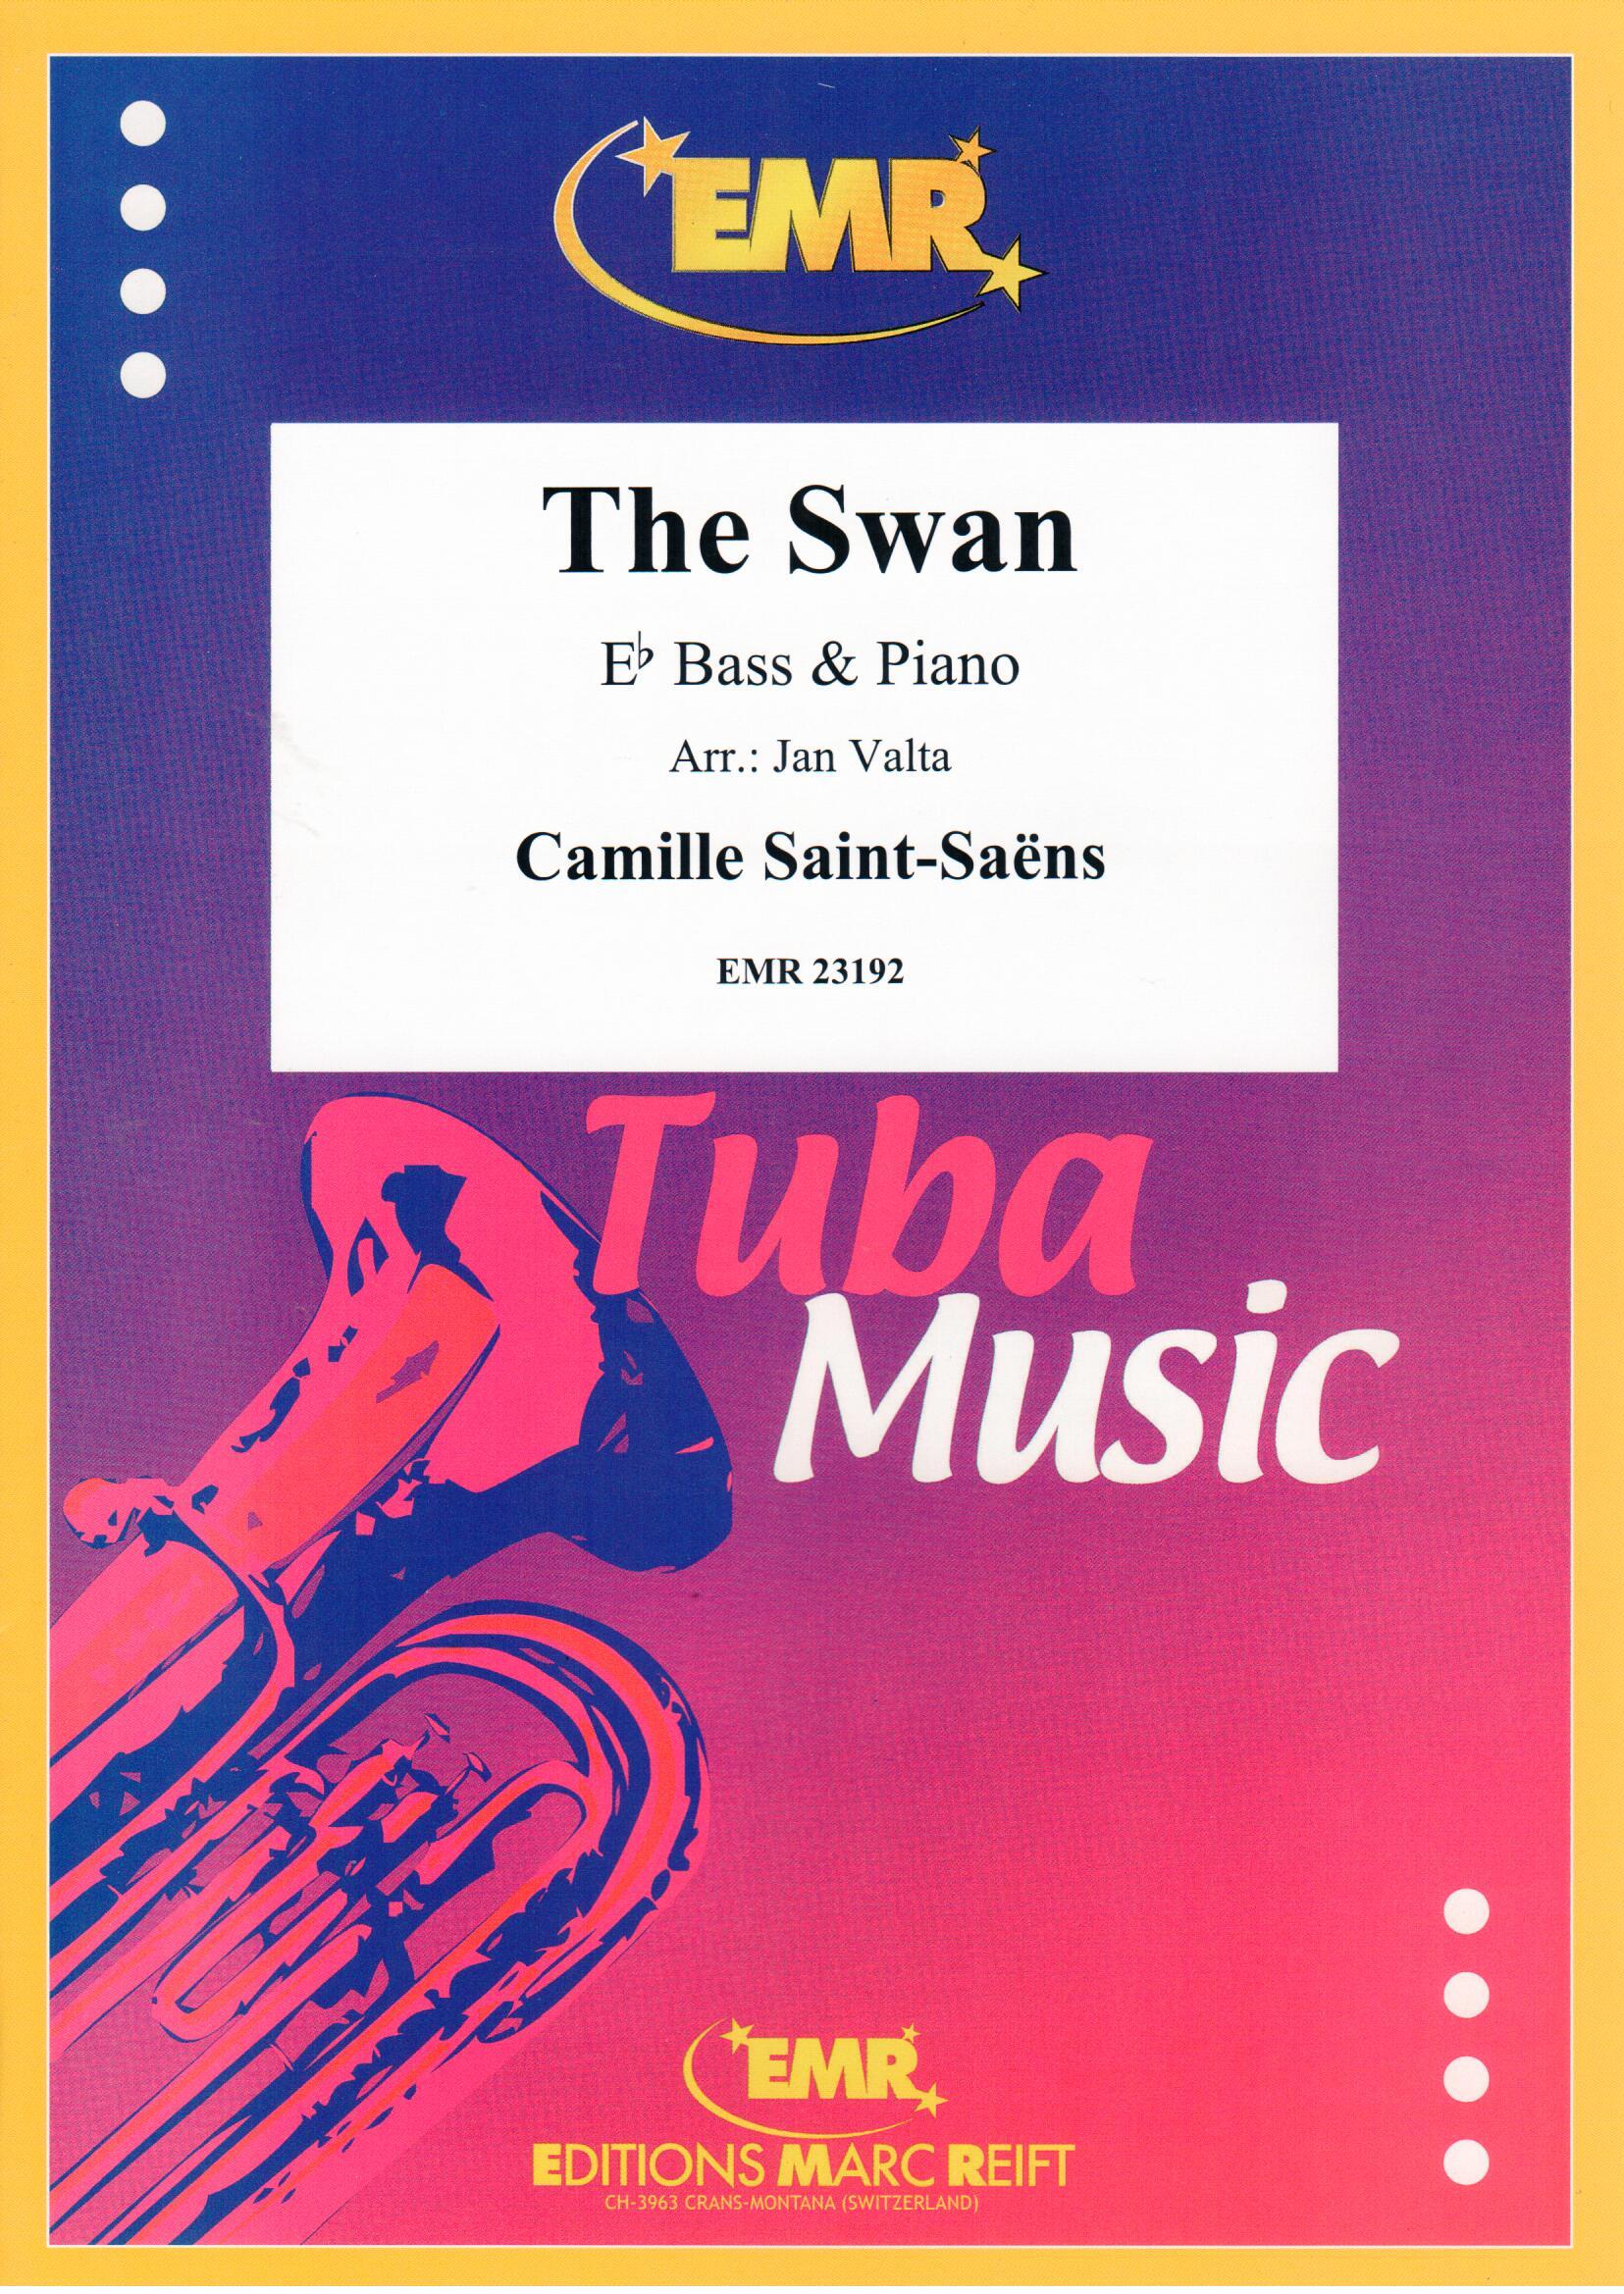 THE SWAN, SOLOS - E♭. Bass